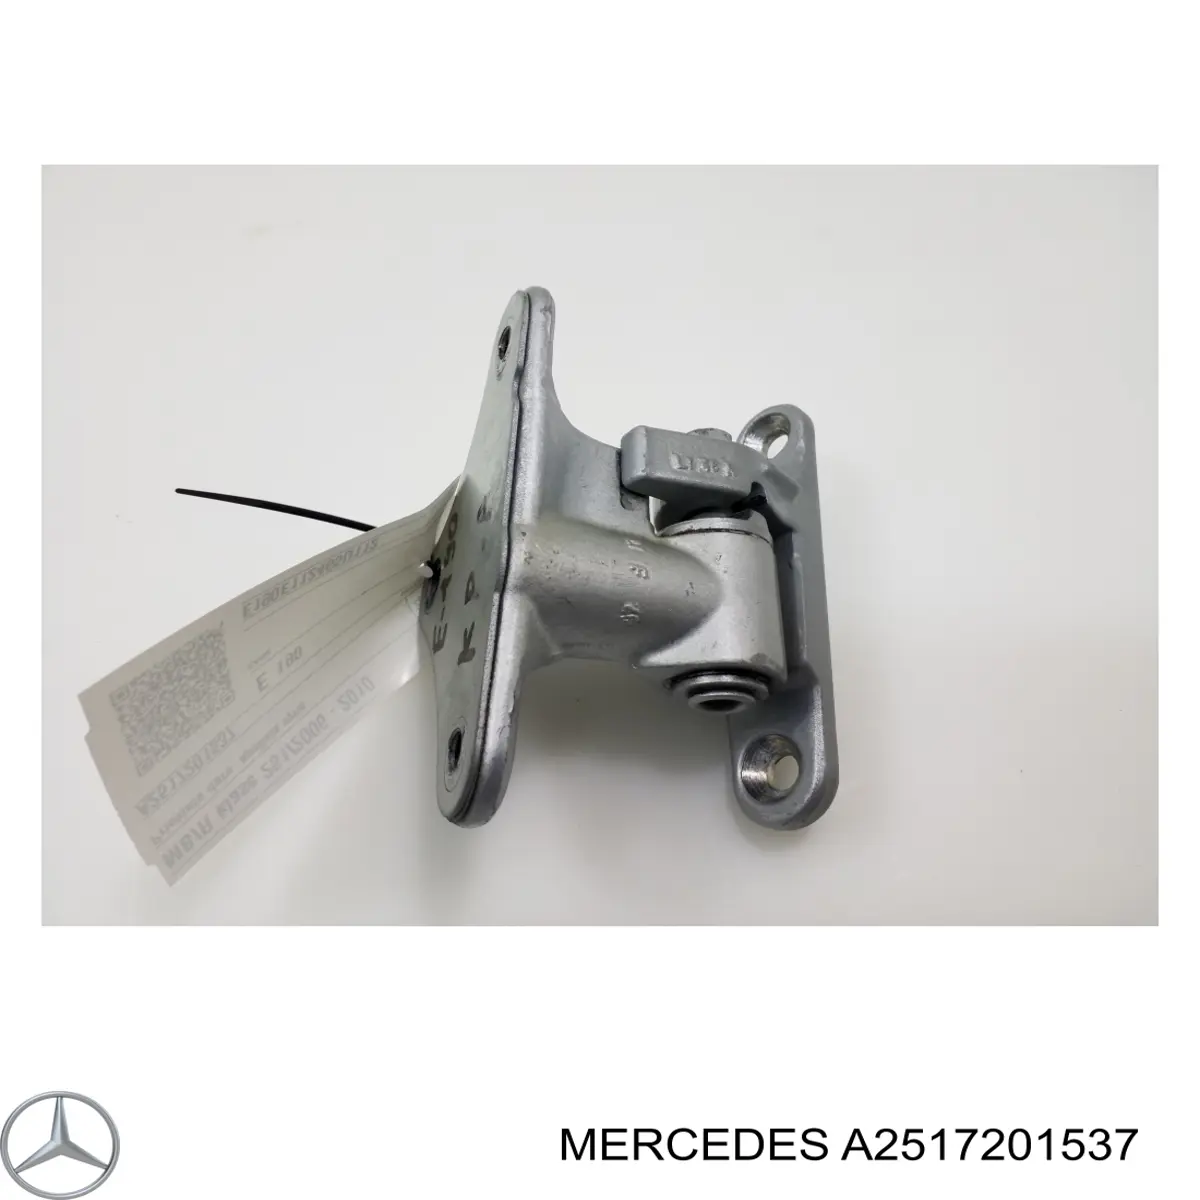 Bisagra de puerta delantera izquierda para Mercedes ML/GLE (W164)